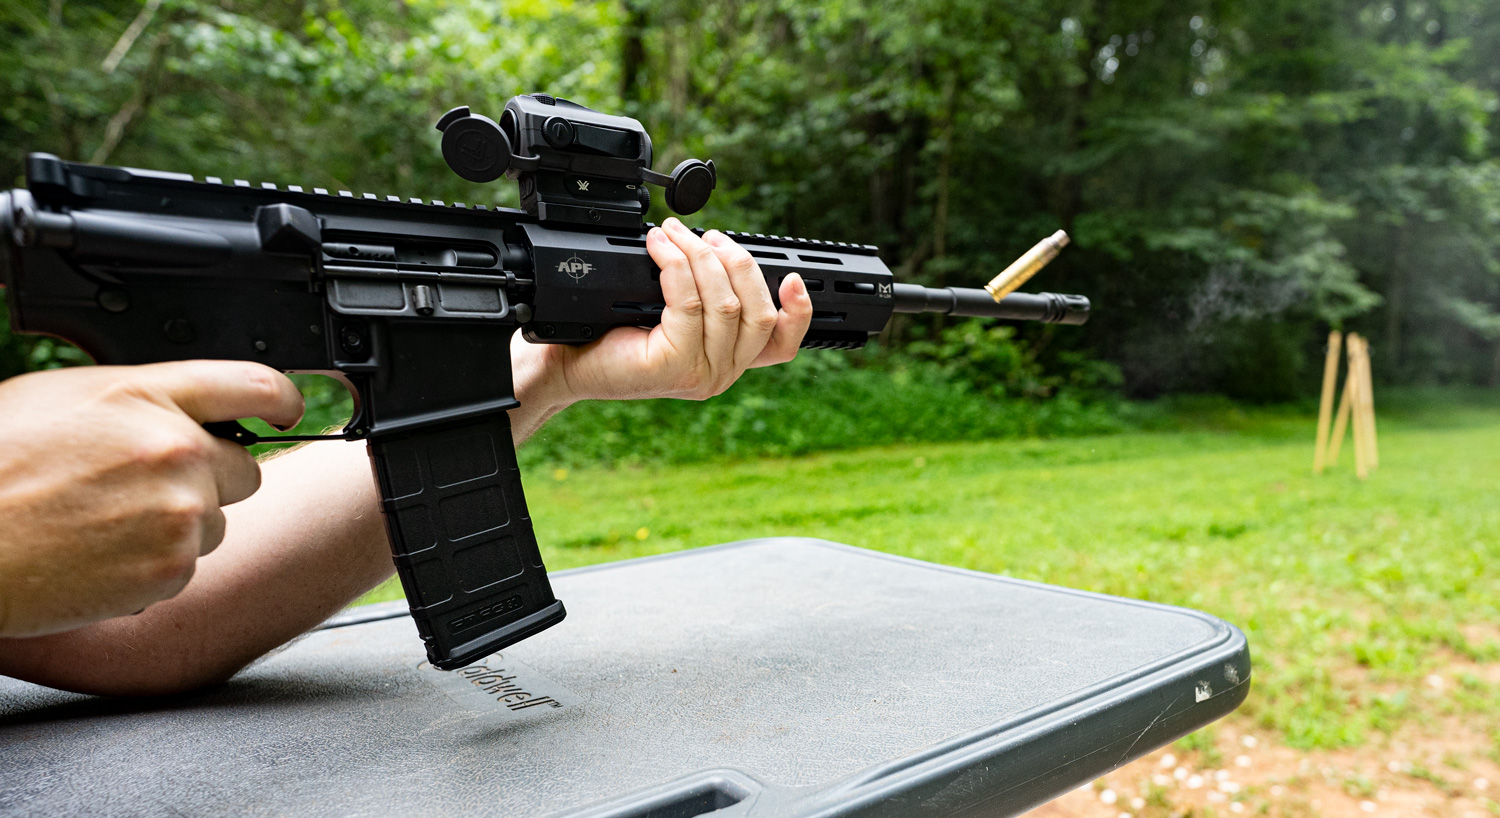 Shooting an AR-15 at the range